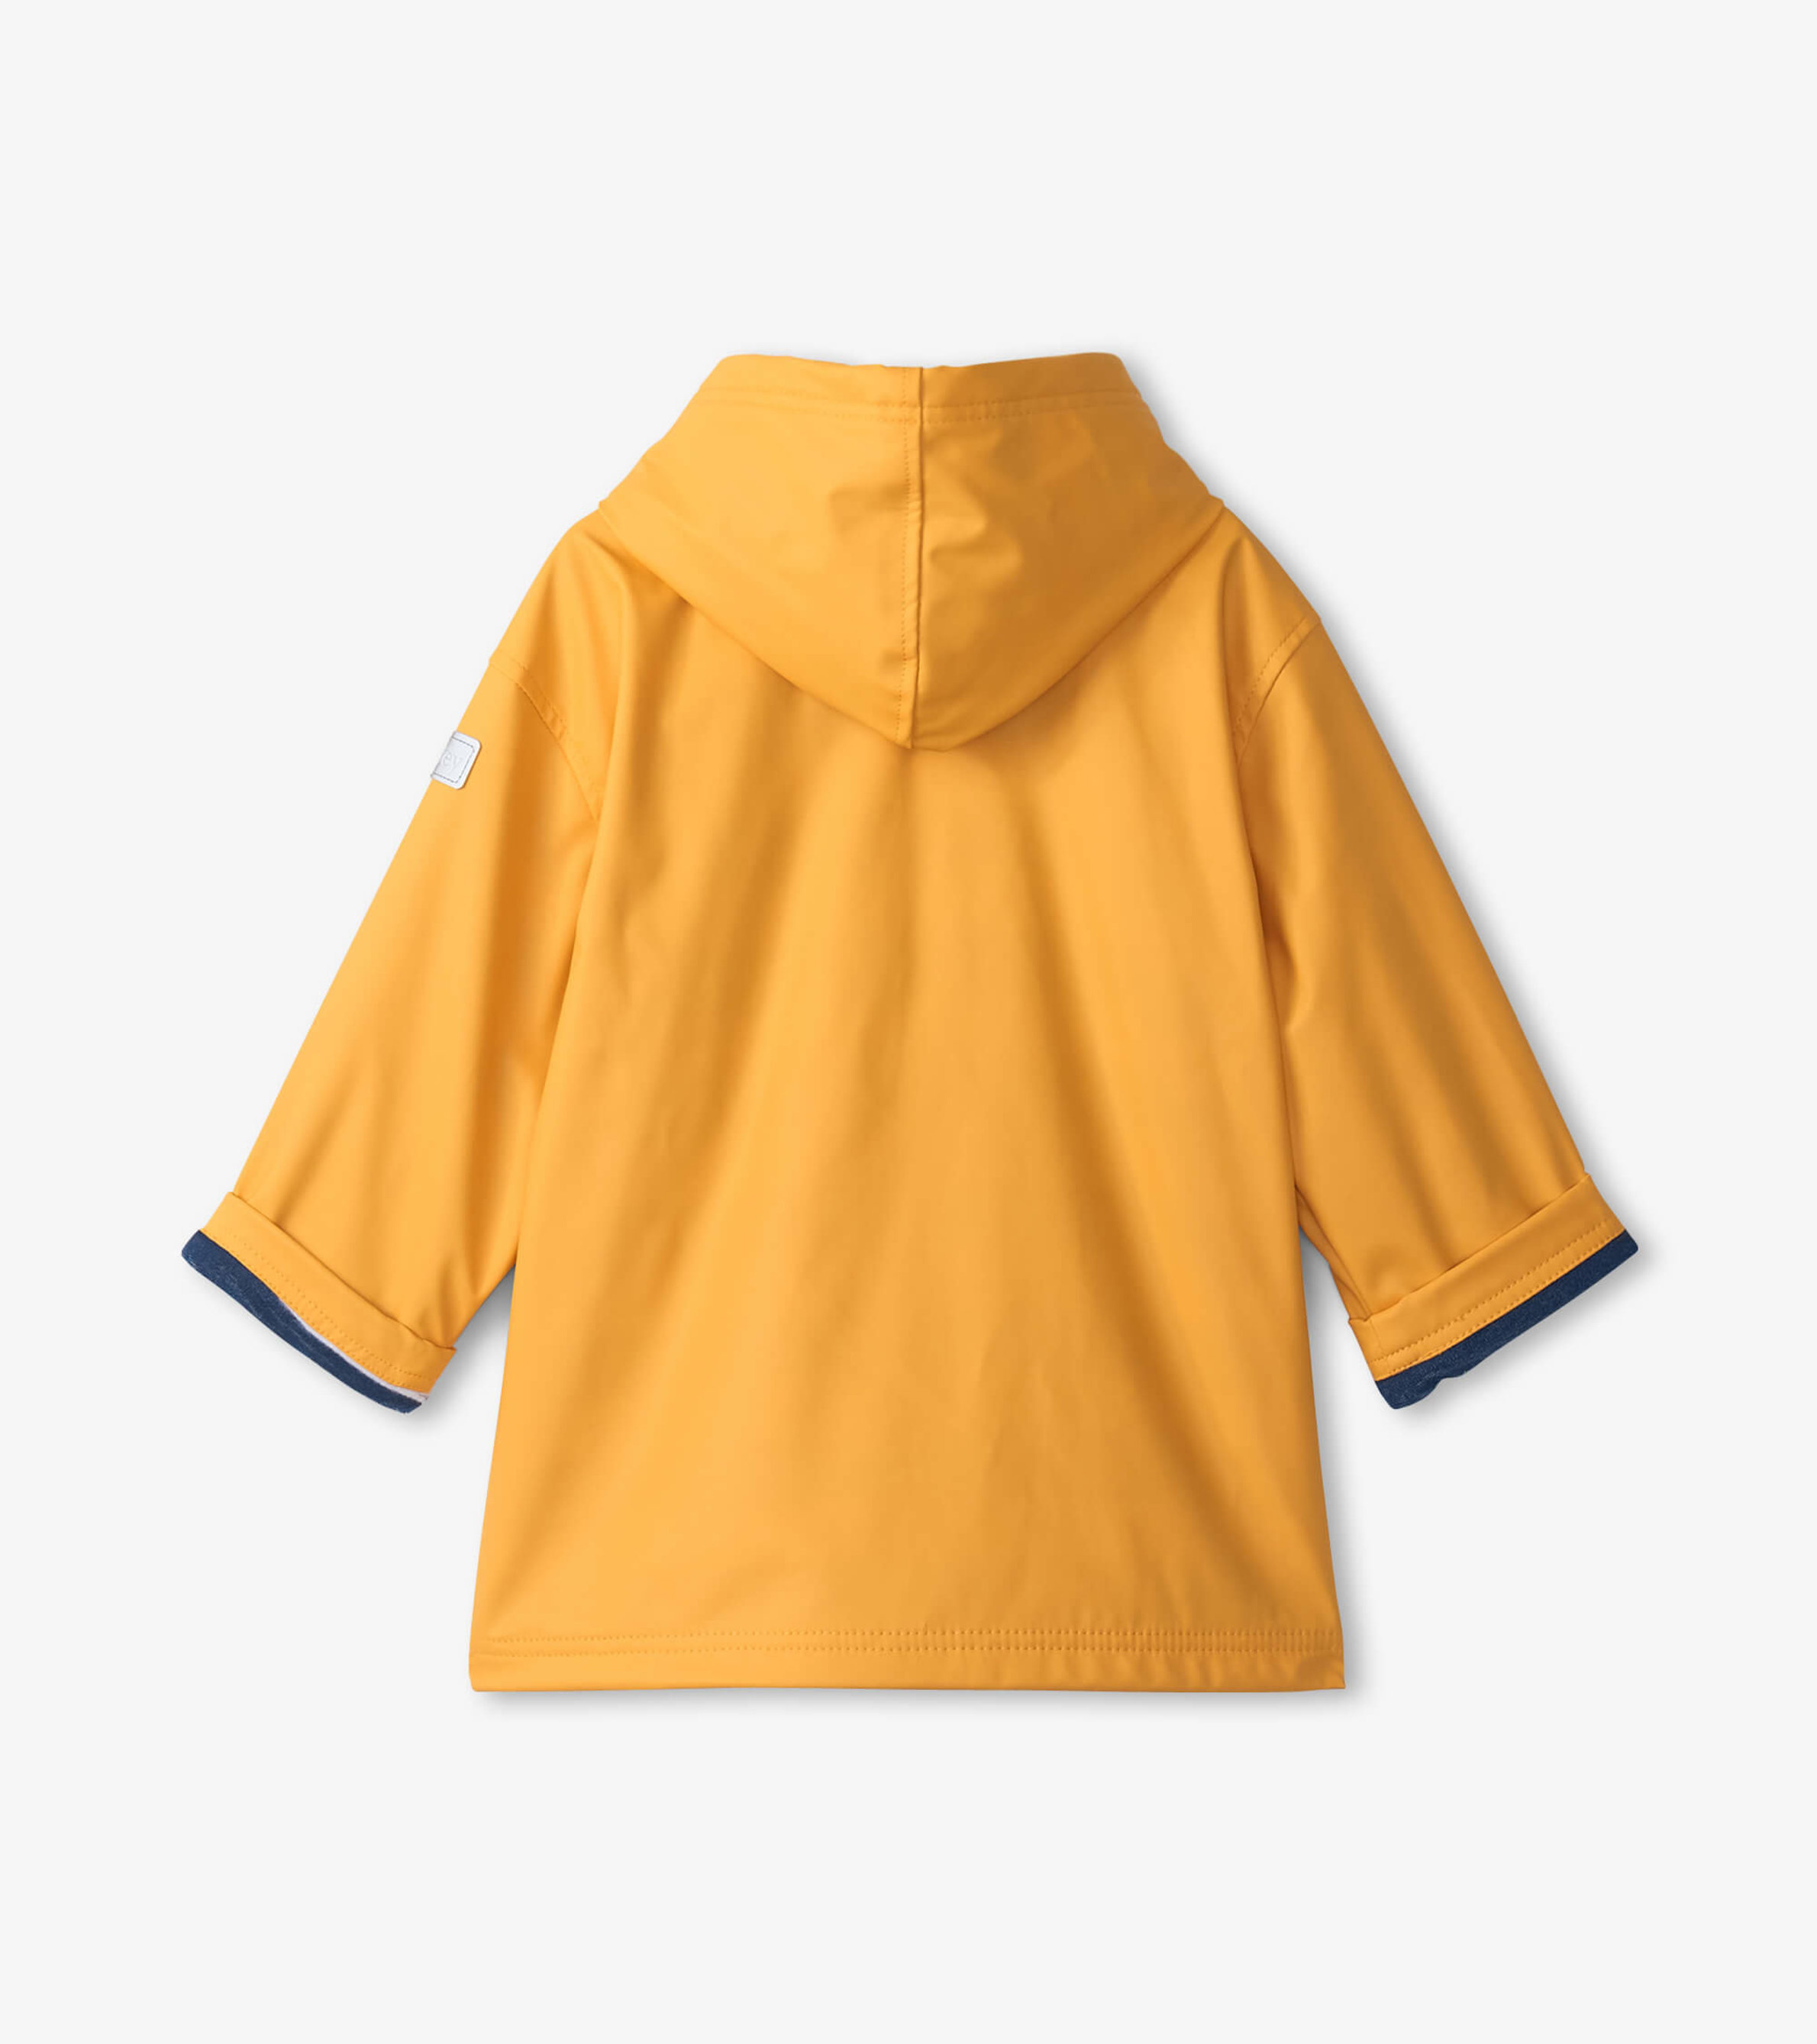 Queilt Yellow Kids Raincoat, 5-8 Years Hooded Rain Poncho Jacket For Girls Boys, Cartoon Cape Rain Coat, Waterproof Rainwear Suit For Outdoor School H